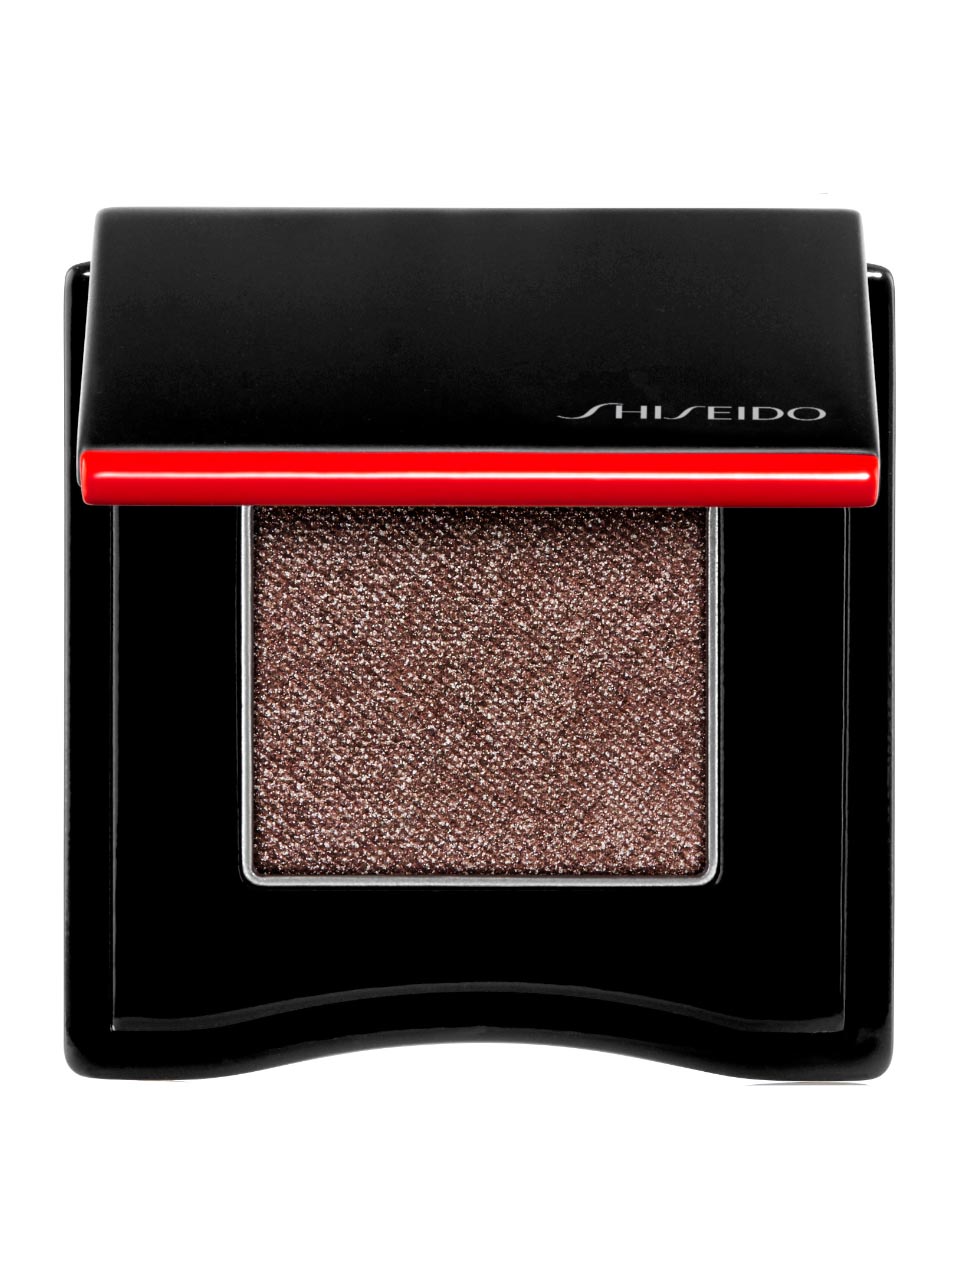 Shiseido Make-Up Pop Powdergel Eye Shadow N° 08 Suru-Suru Taupe null - onesize - 1